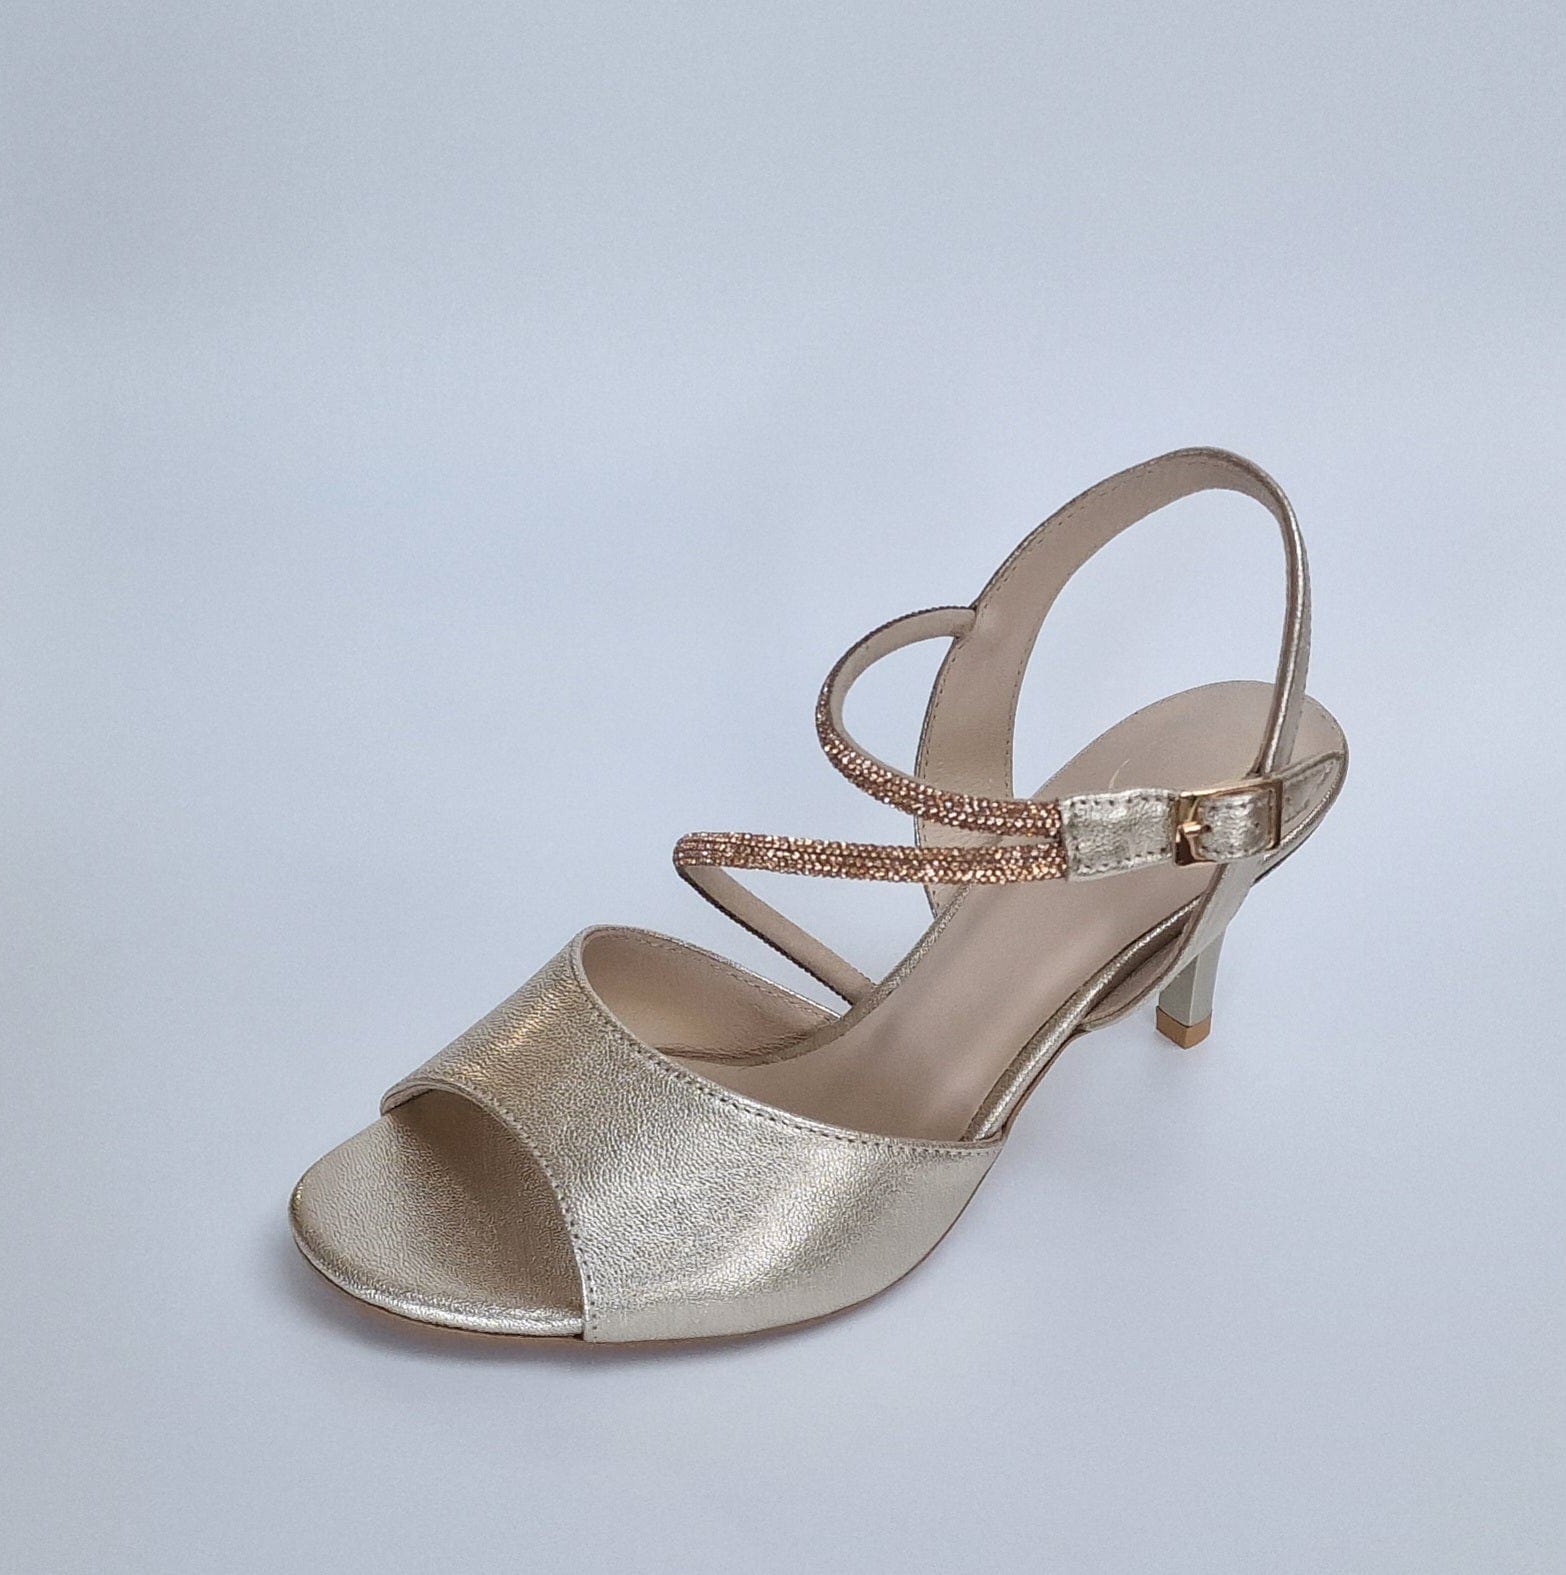 SIMMI Heels for Women for sale | eBay